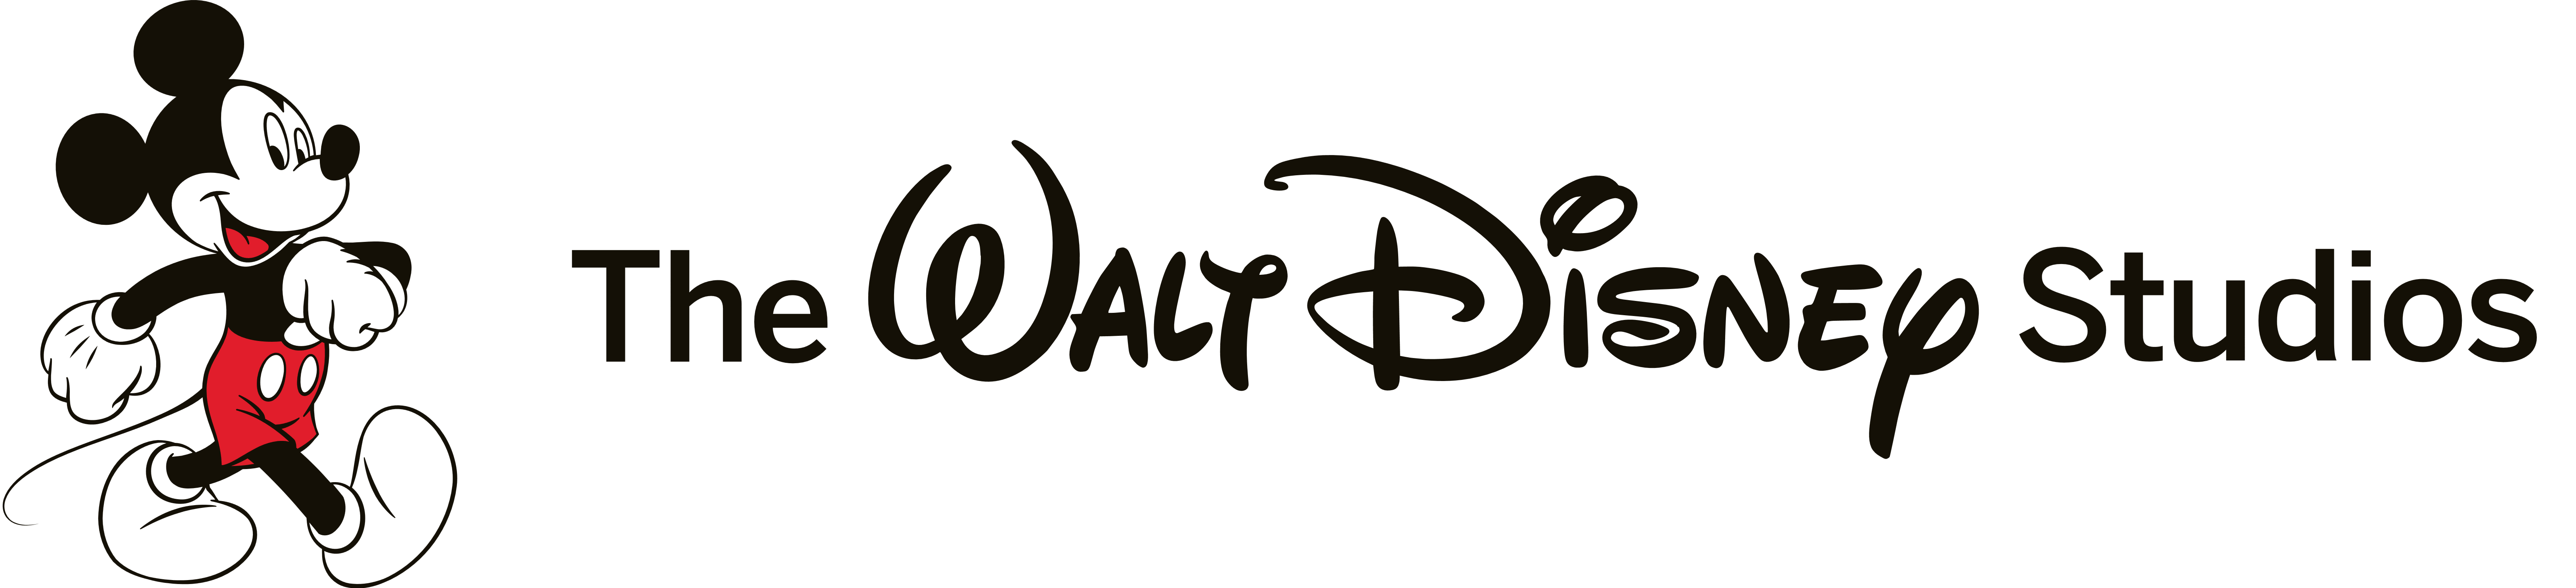 Walt Disney Studios Logo - Walt Disney Pictures Png Logo - Free Transparent PNG Logos